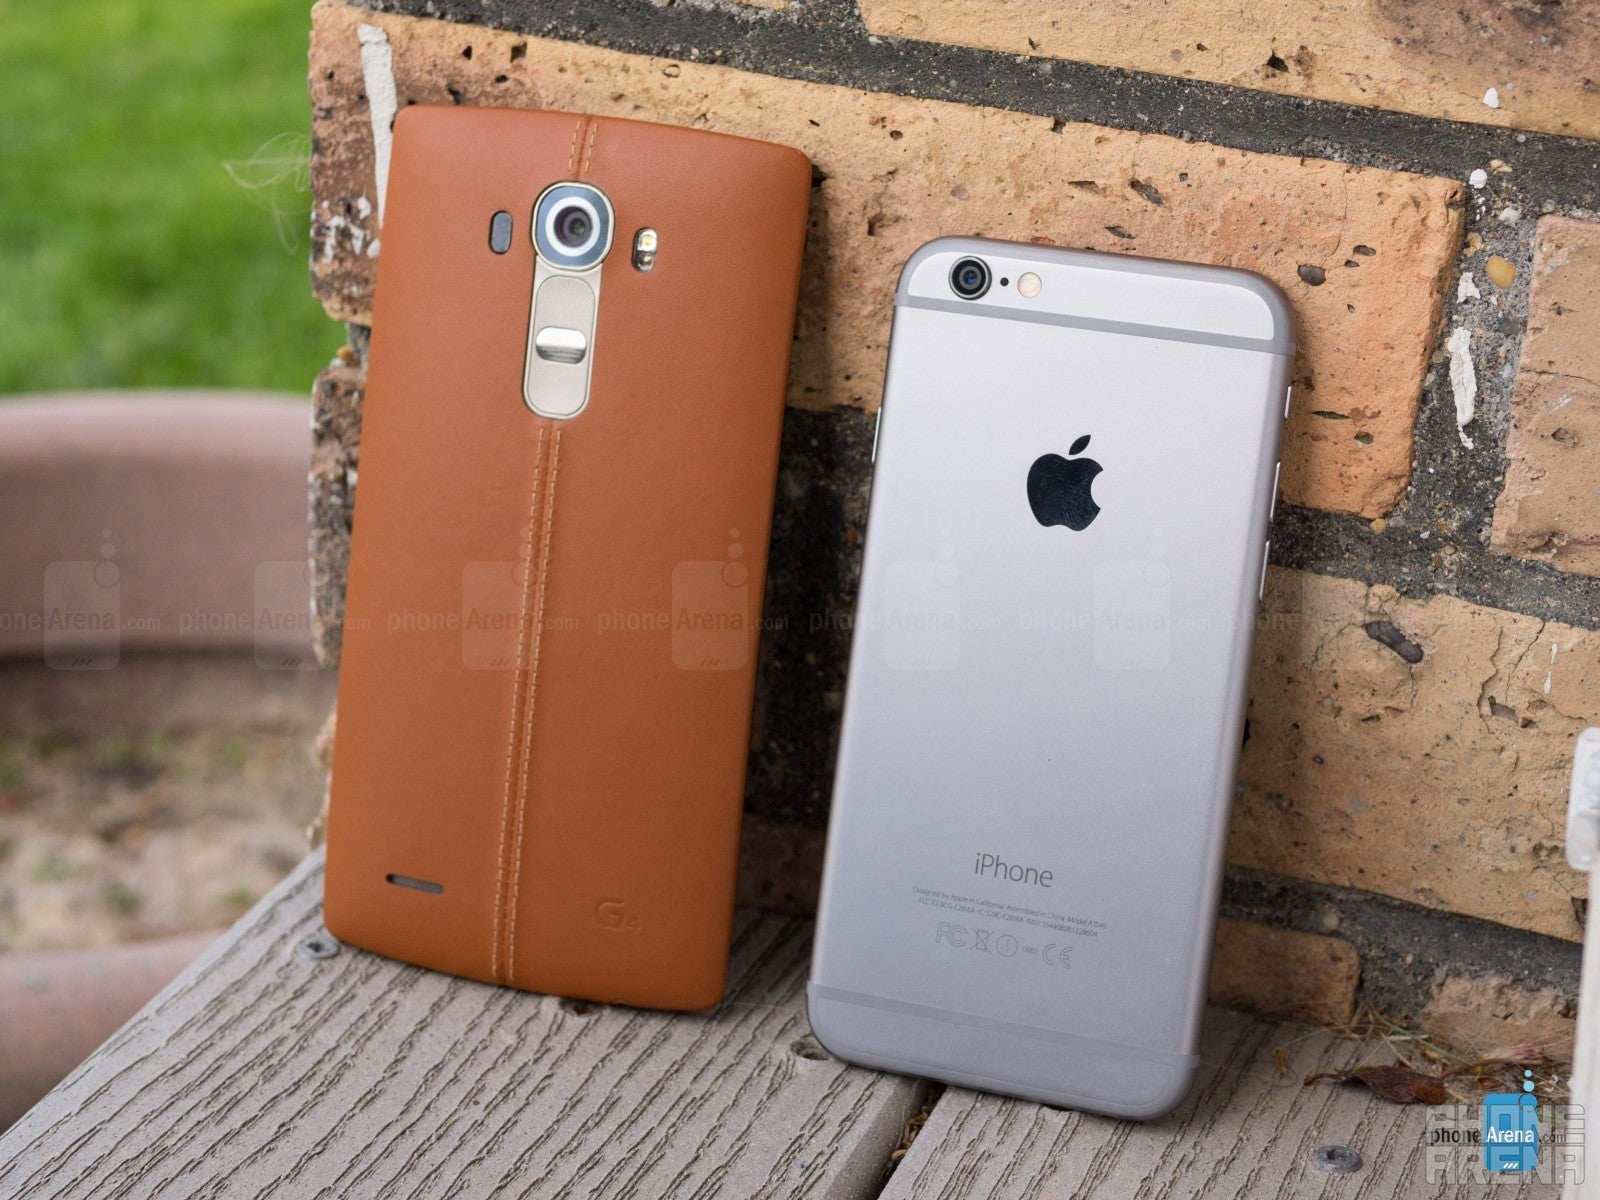 LG G4 vs Apple iPhone 6